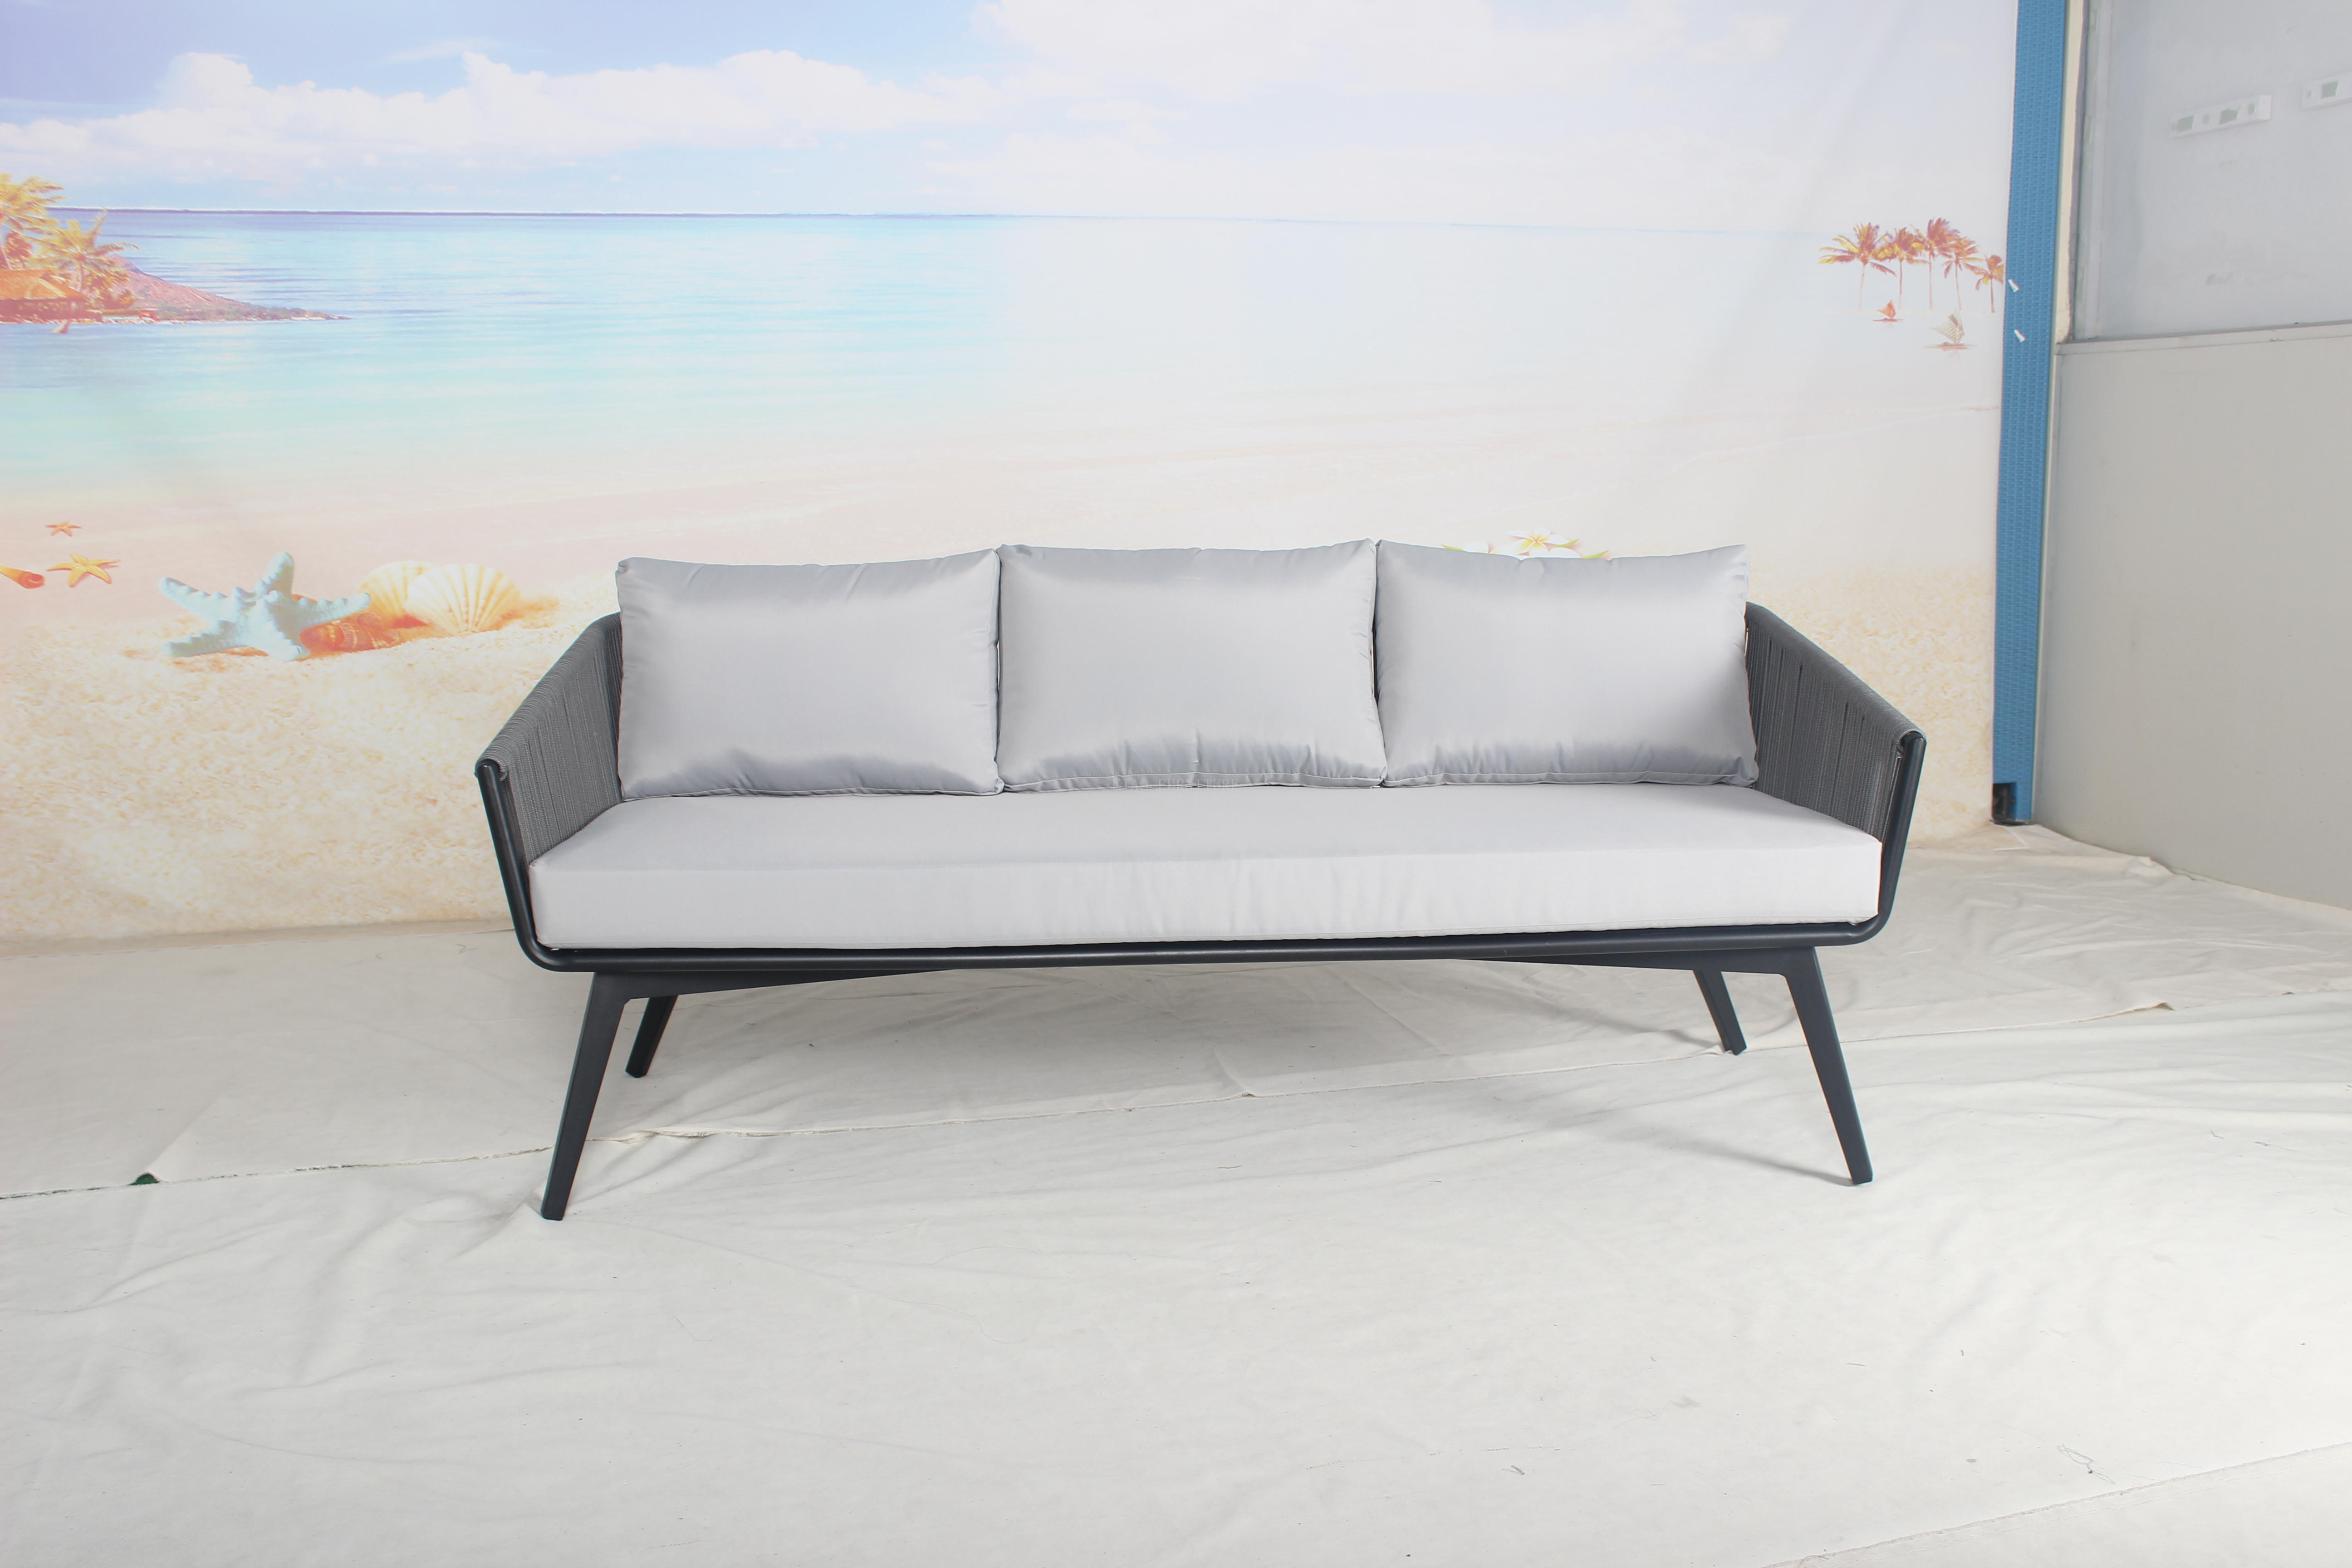 Modern grey aluminum outdoor sofa set